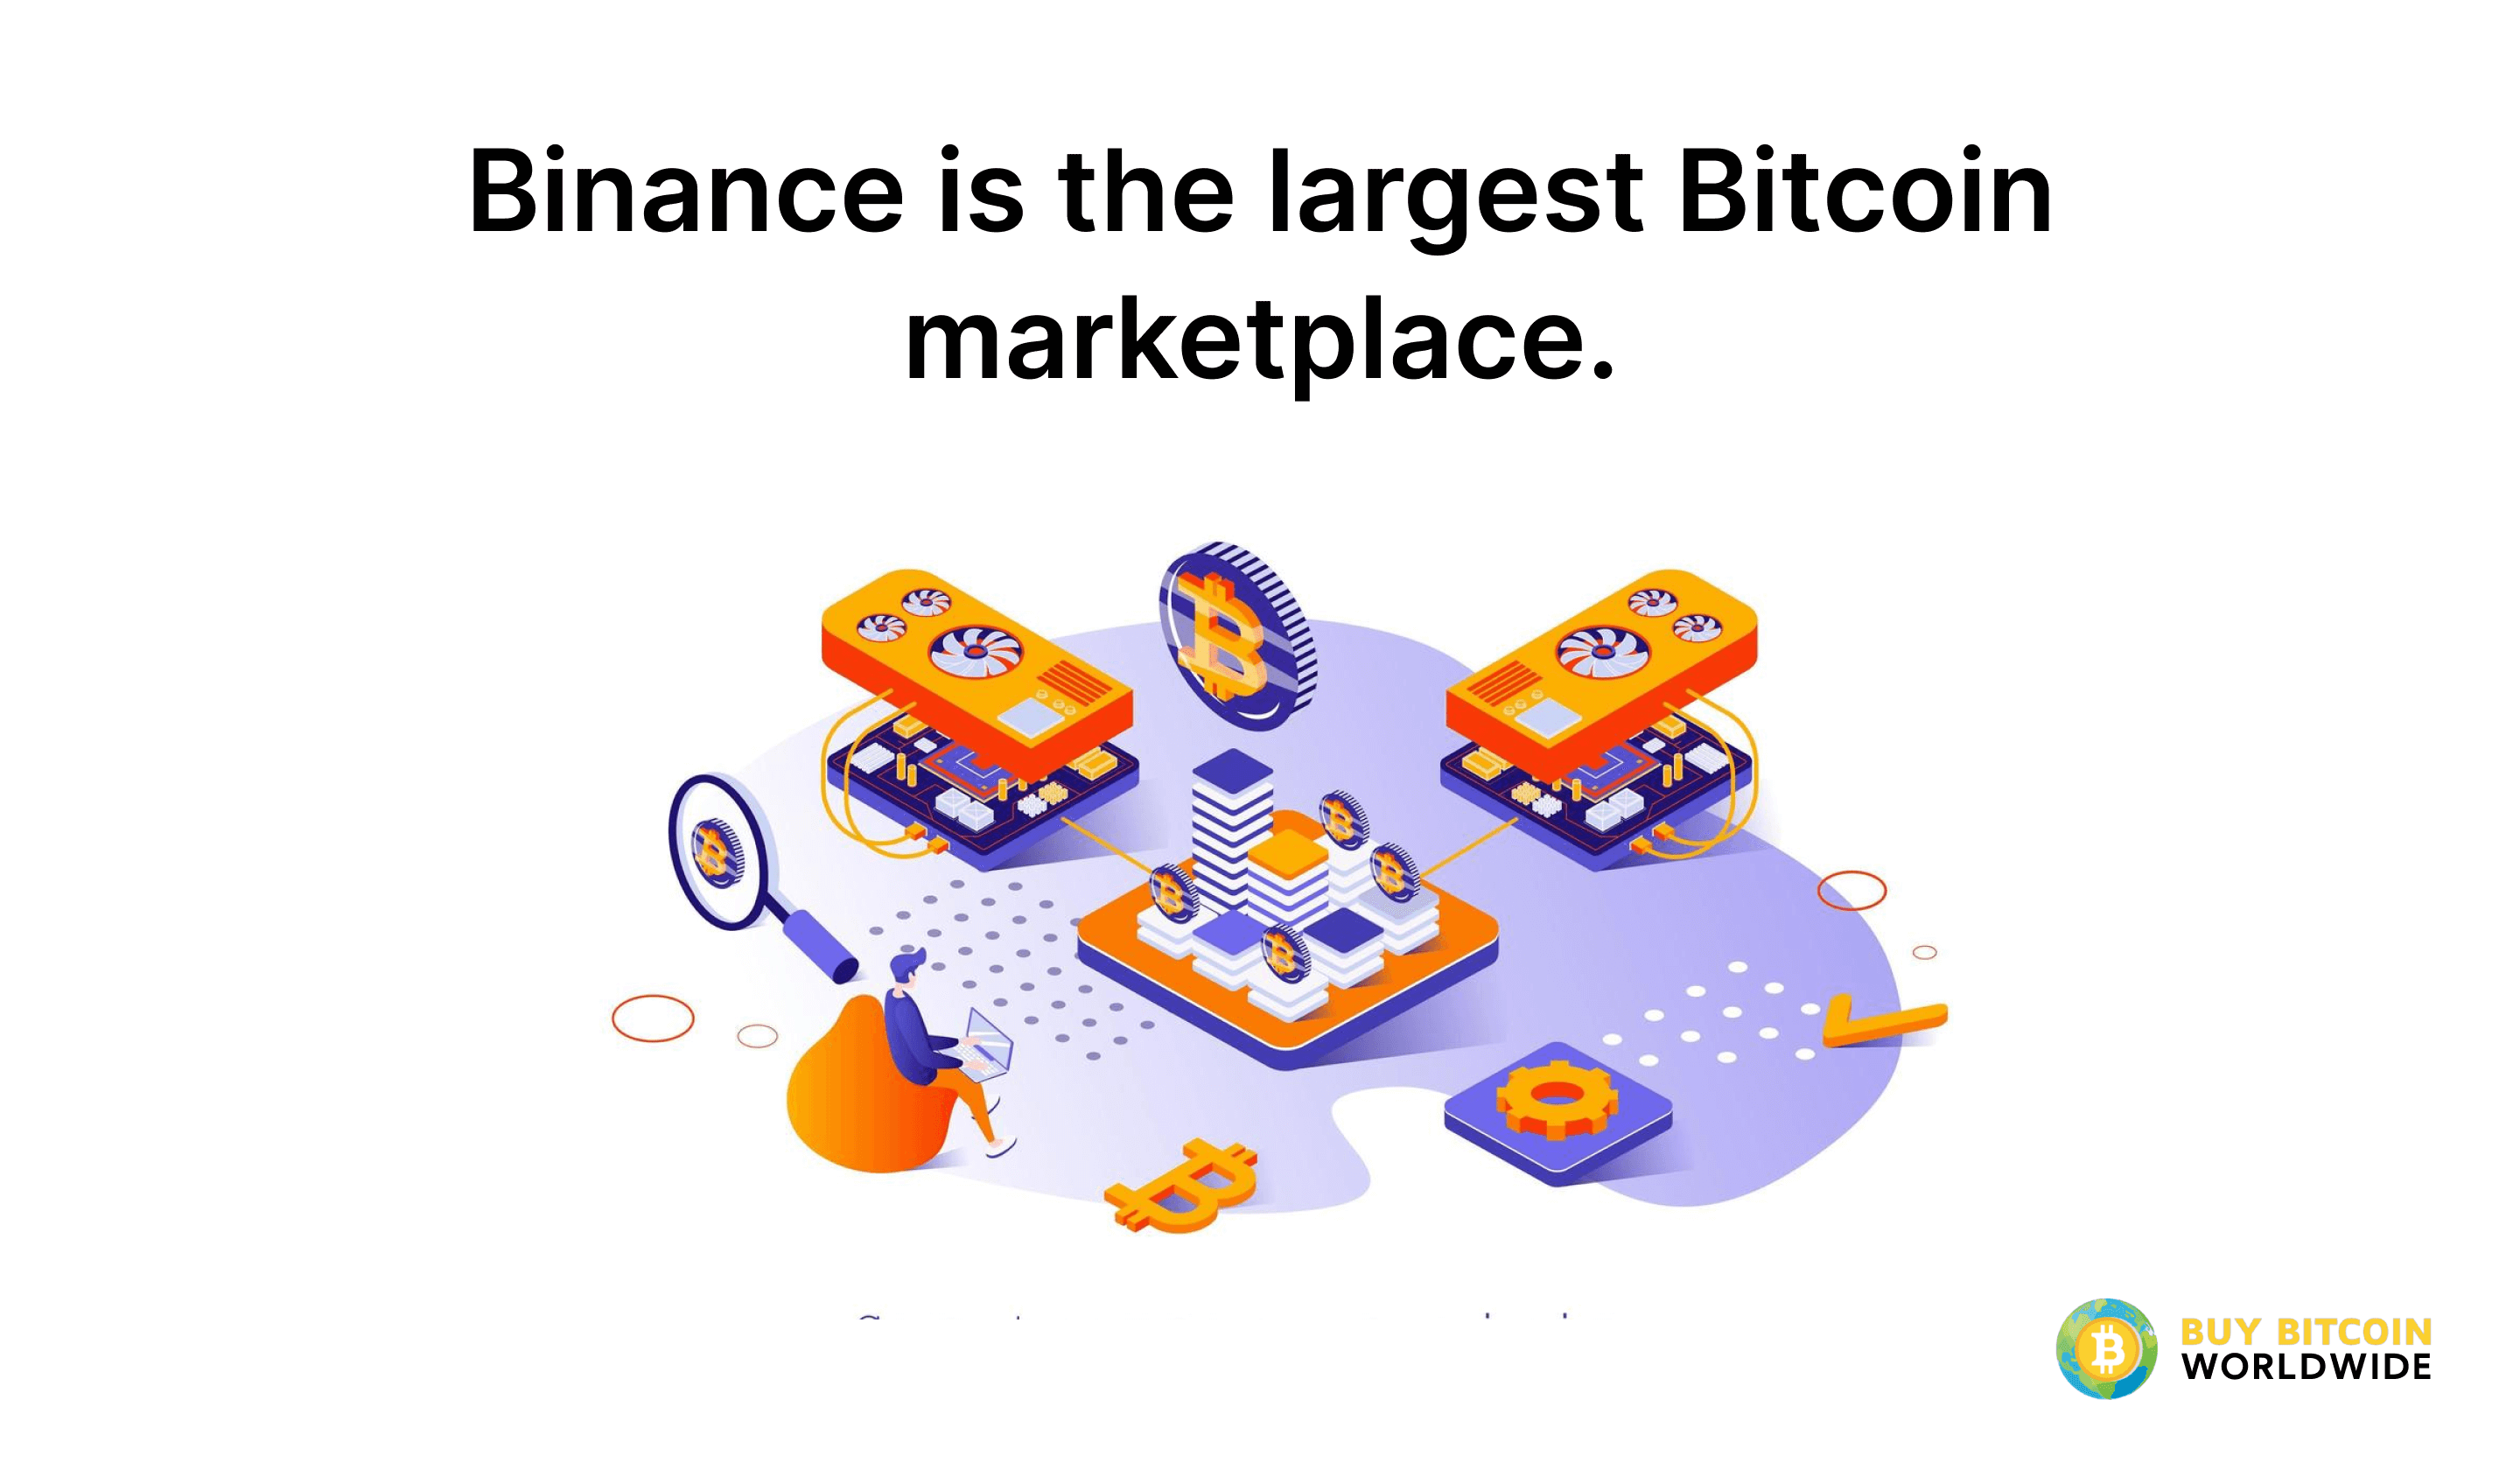 largest bitcoin marketplace is binance